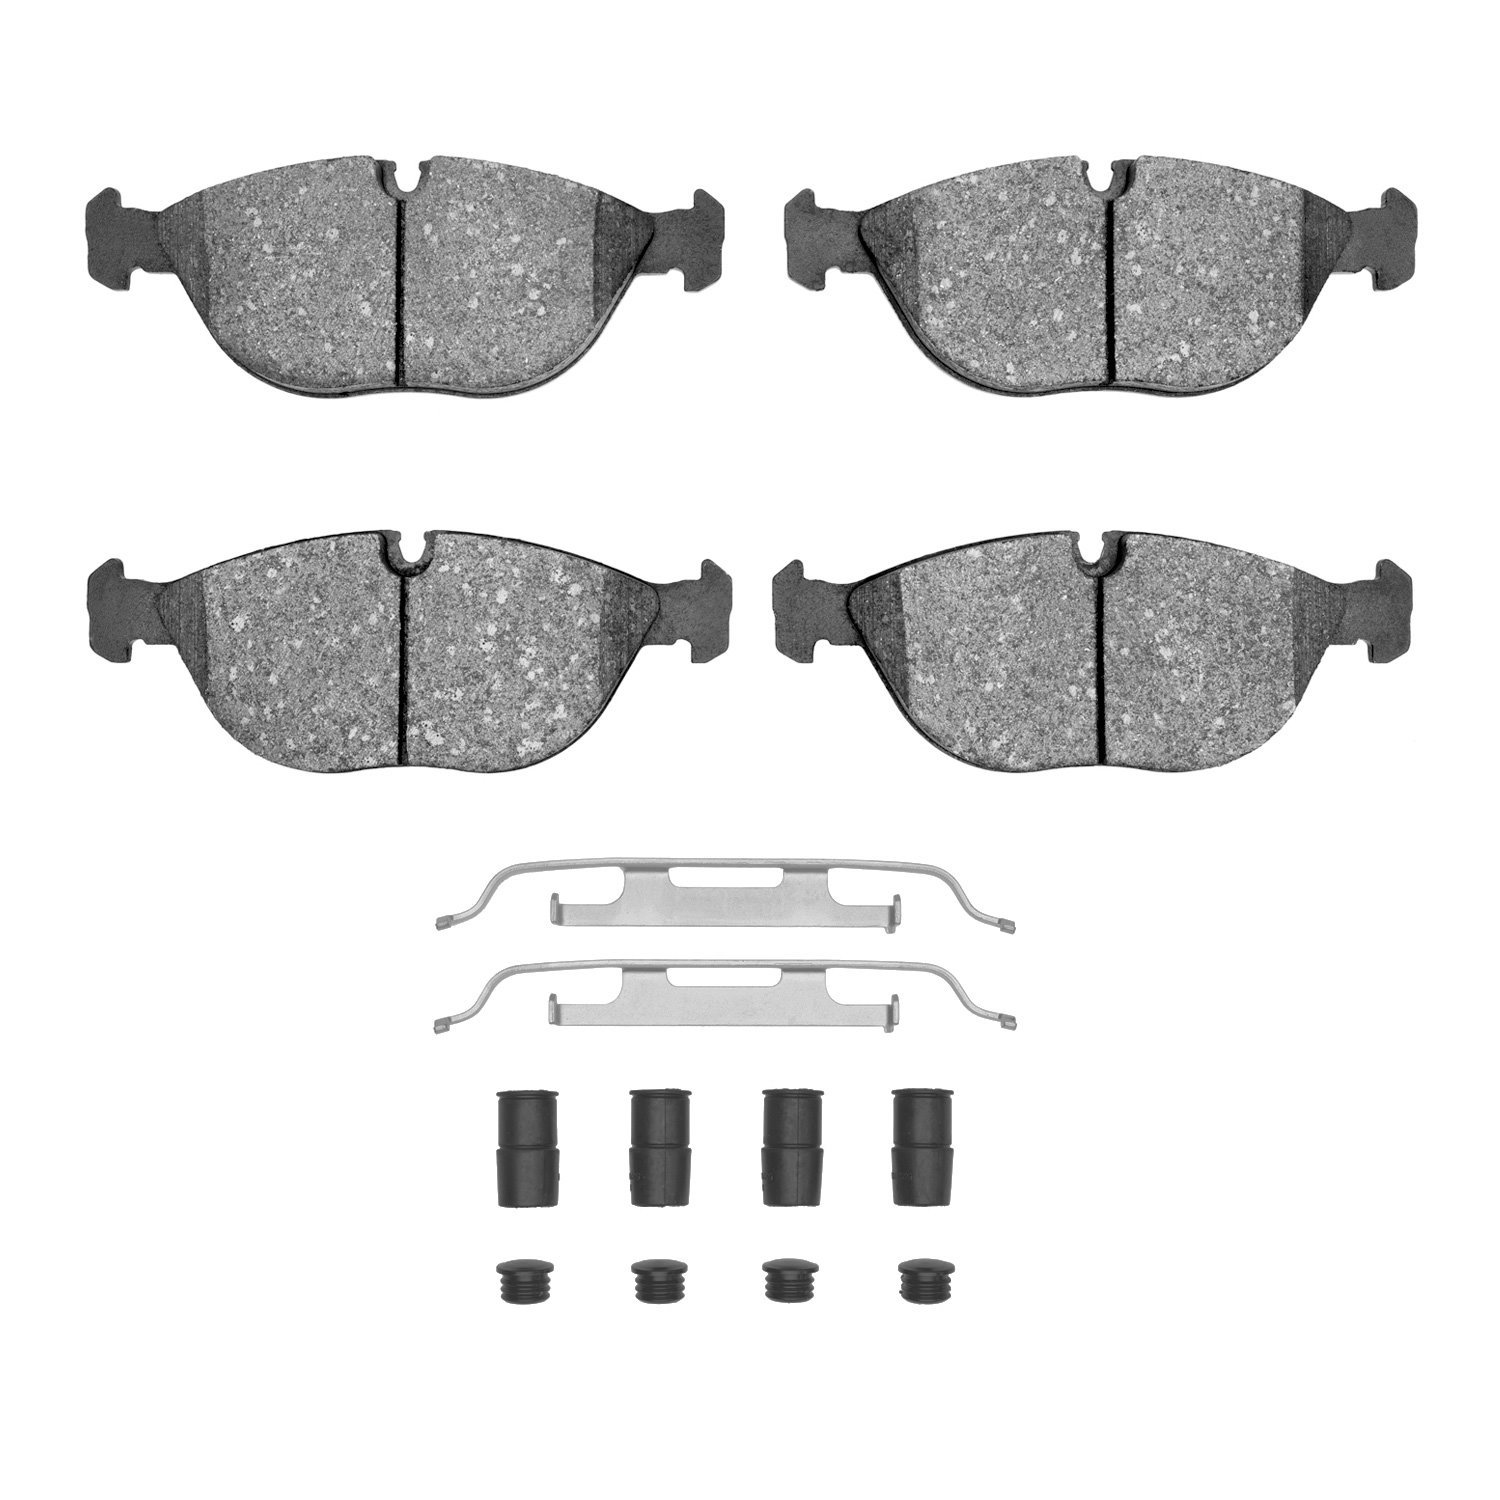 1600-0682-01 5000 Euro Ceramic Brake Pads & Hardware Kit, 1995-2006 Multiple Makes/Models, Position: Front